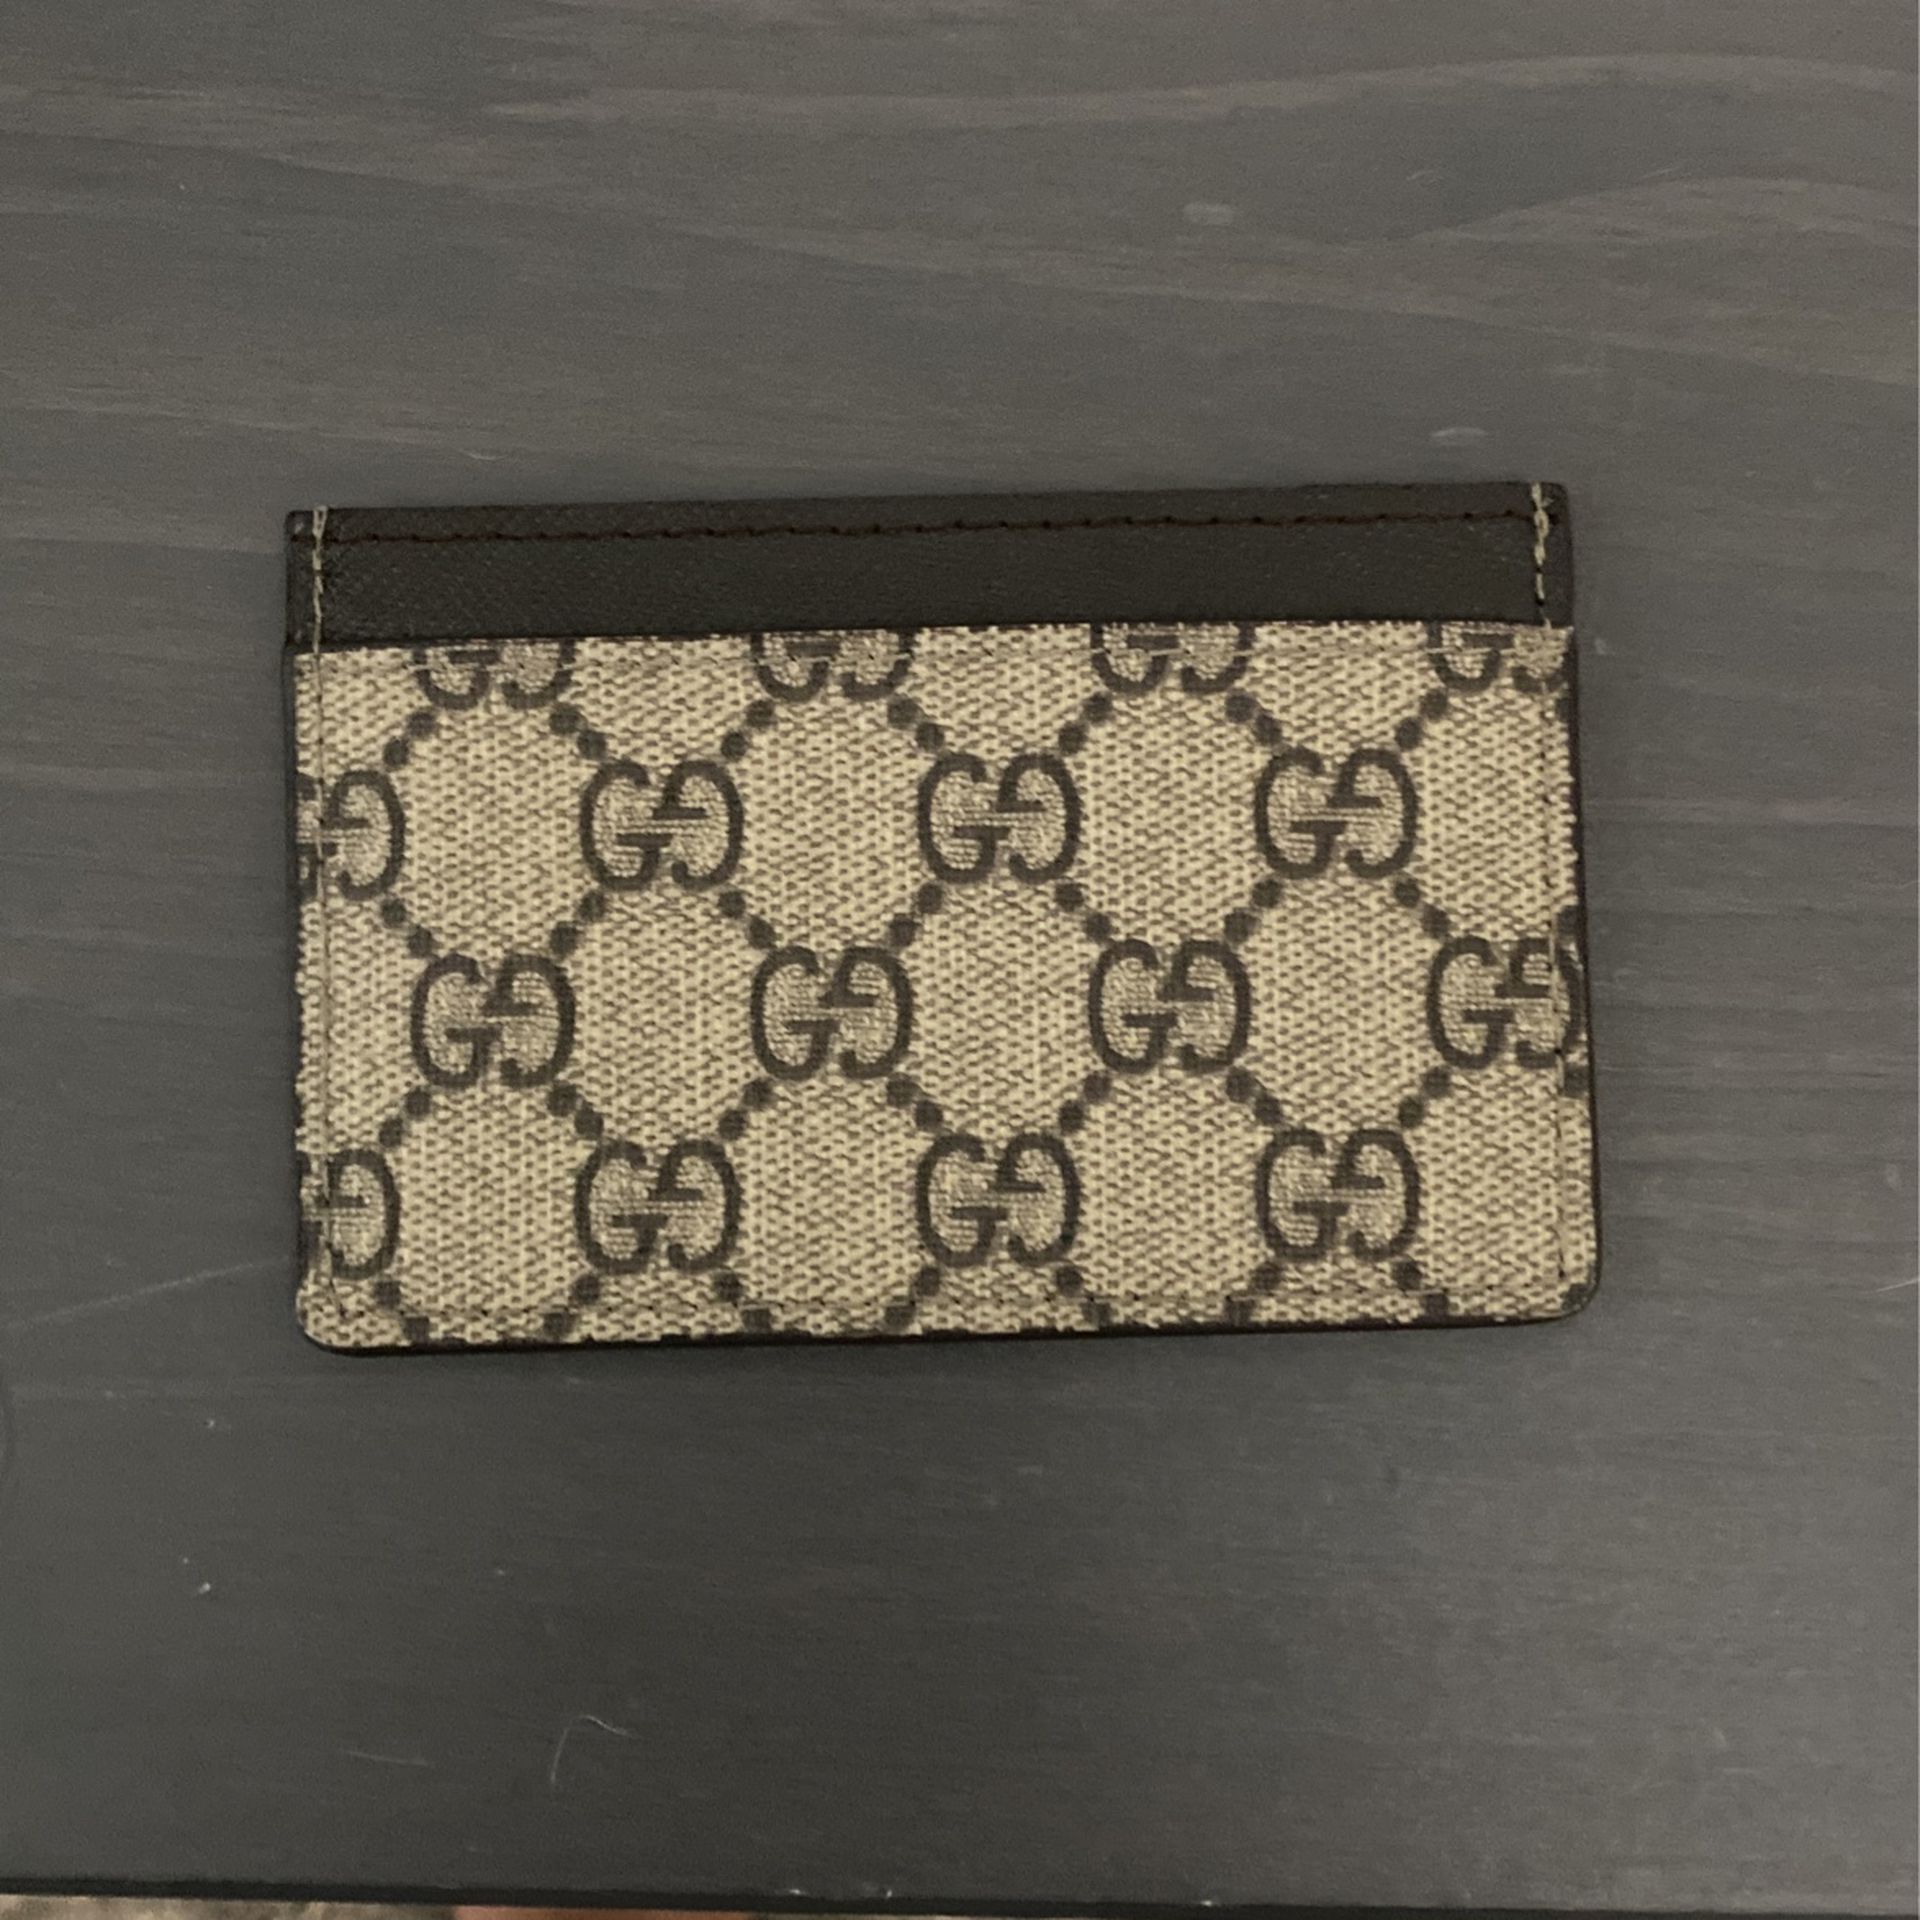 Gucci Card Holder/Wallet 